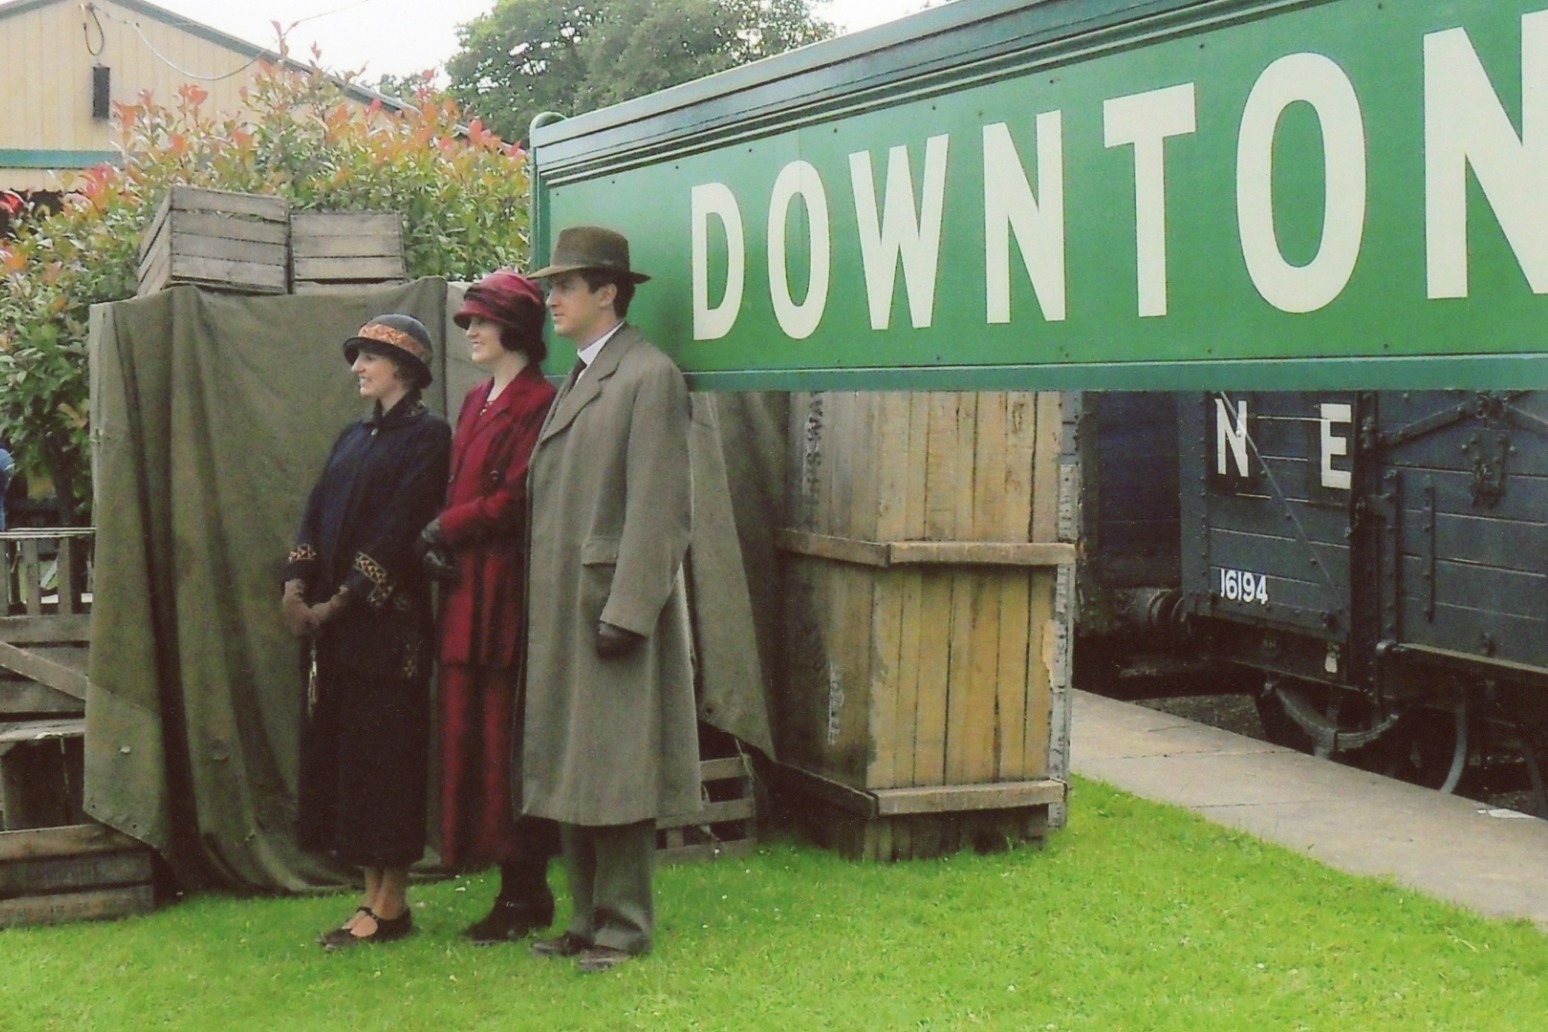 Downton Abbey sequel gets official title 